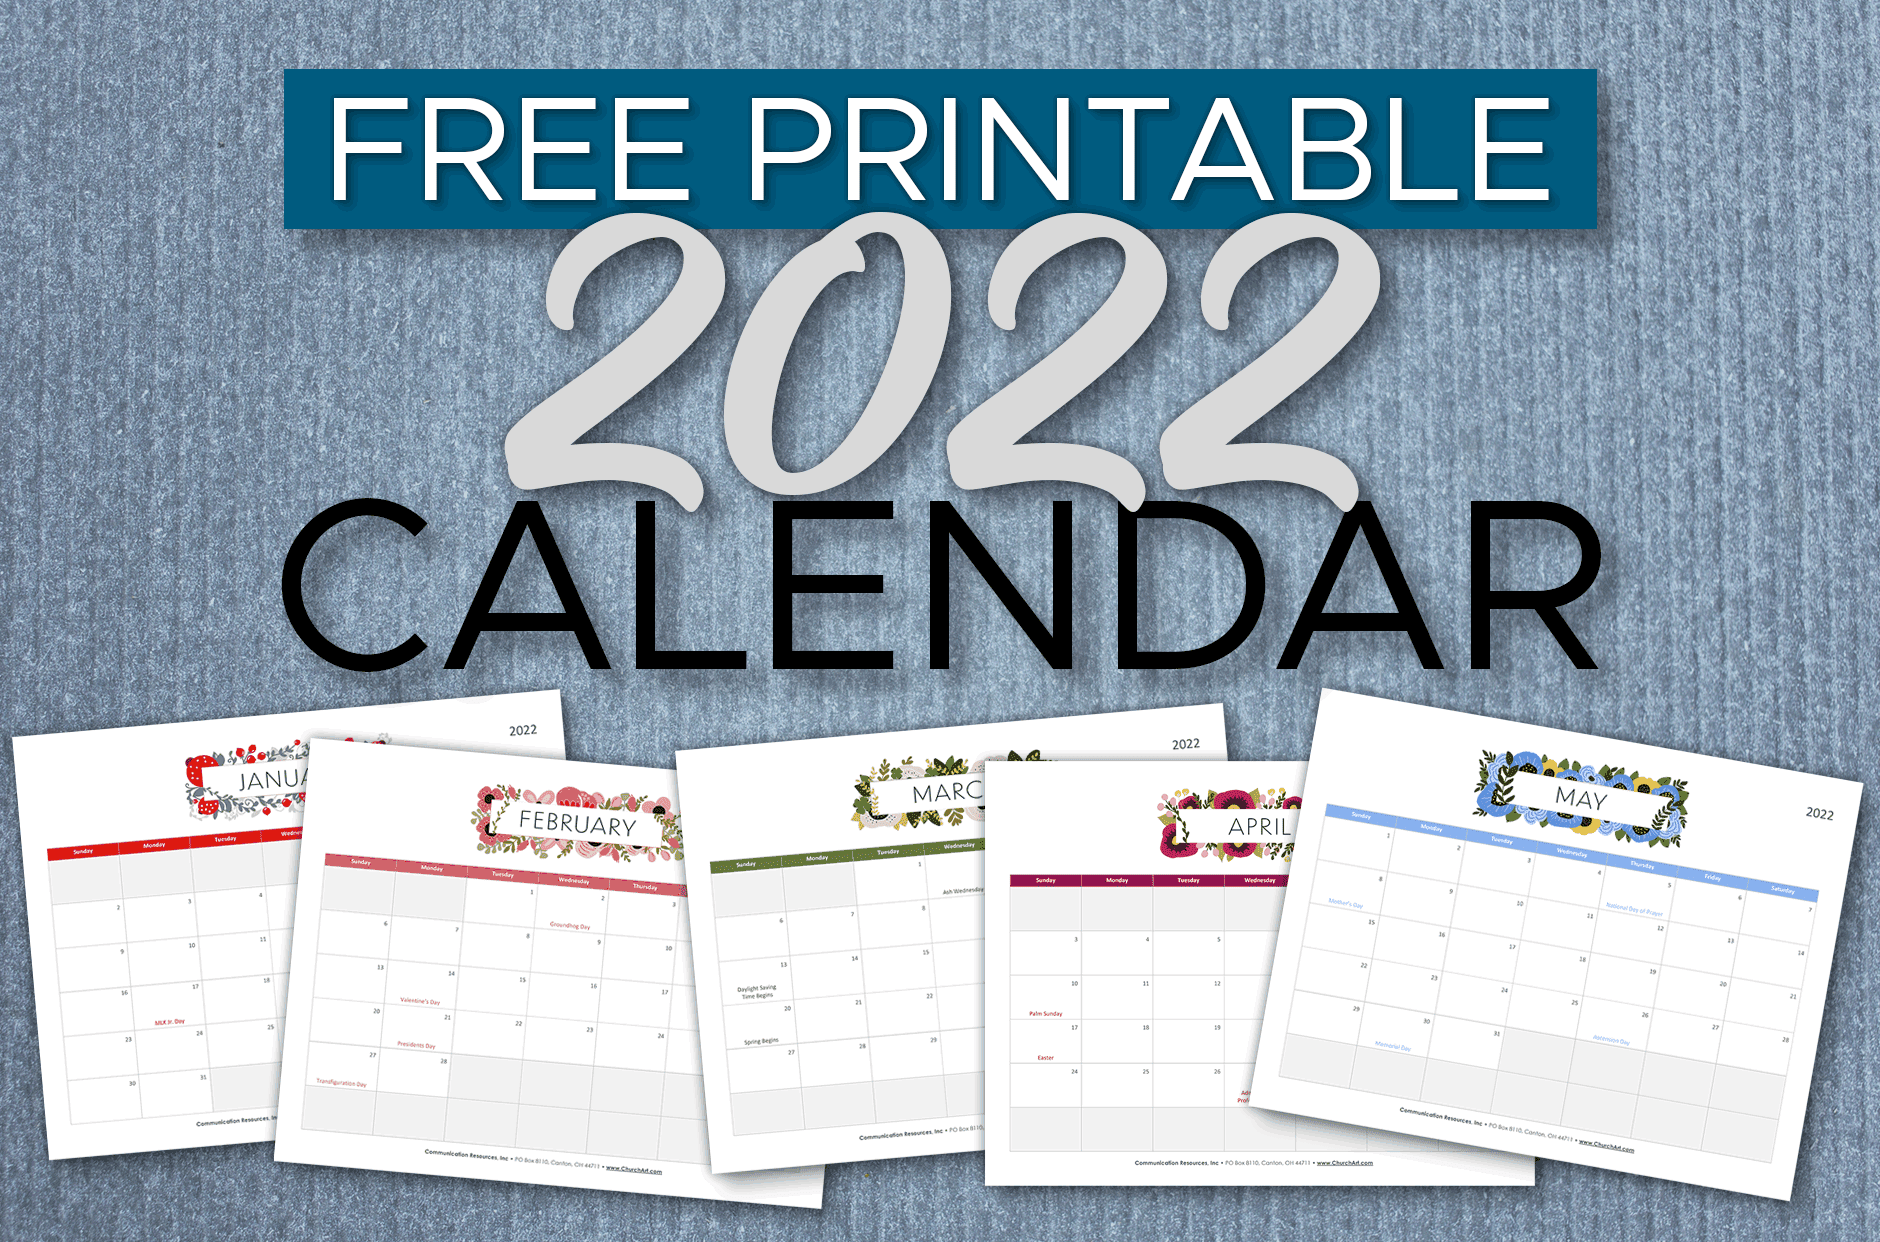 Free Calendar 2022 Printable Free Printable 2022 Church Calendar | Churchart.com Blog